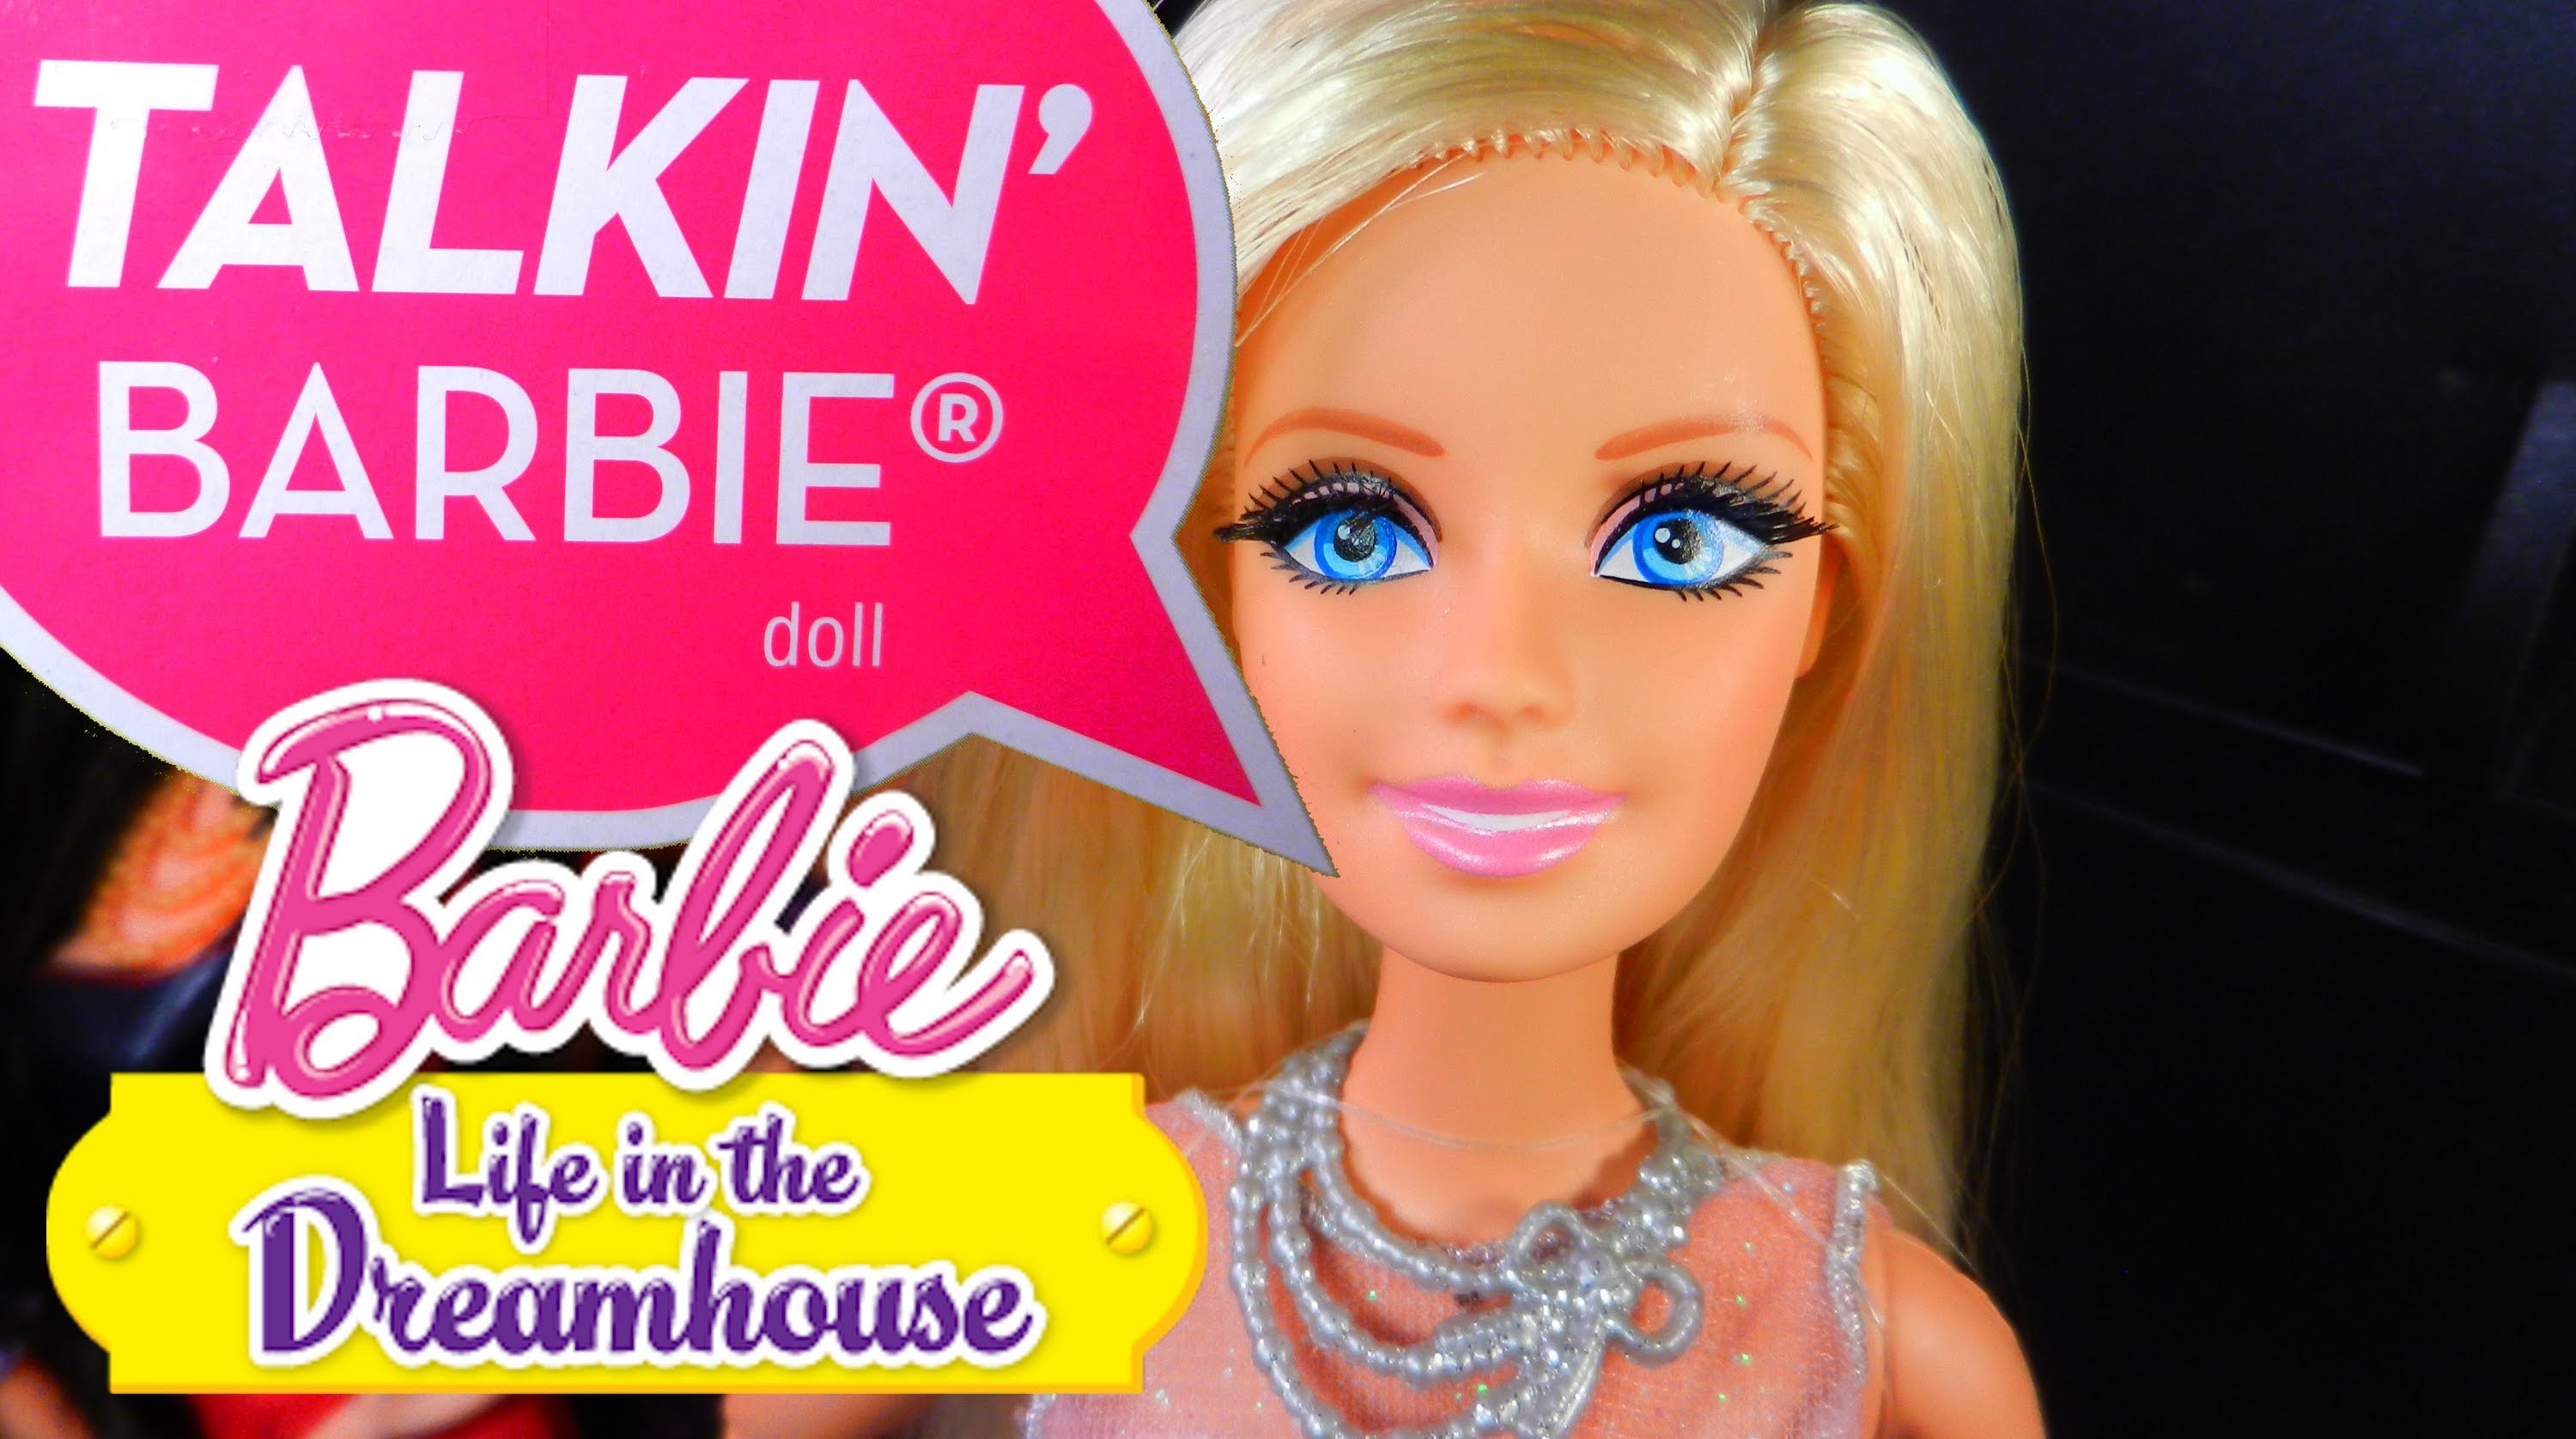 hello barbie talking dreamhouse